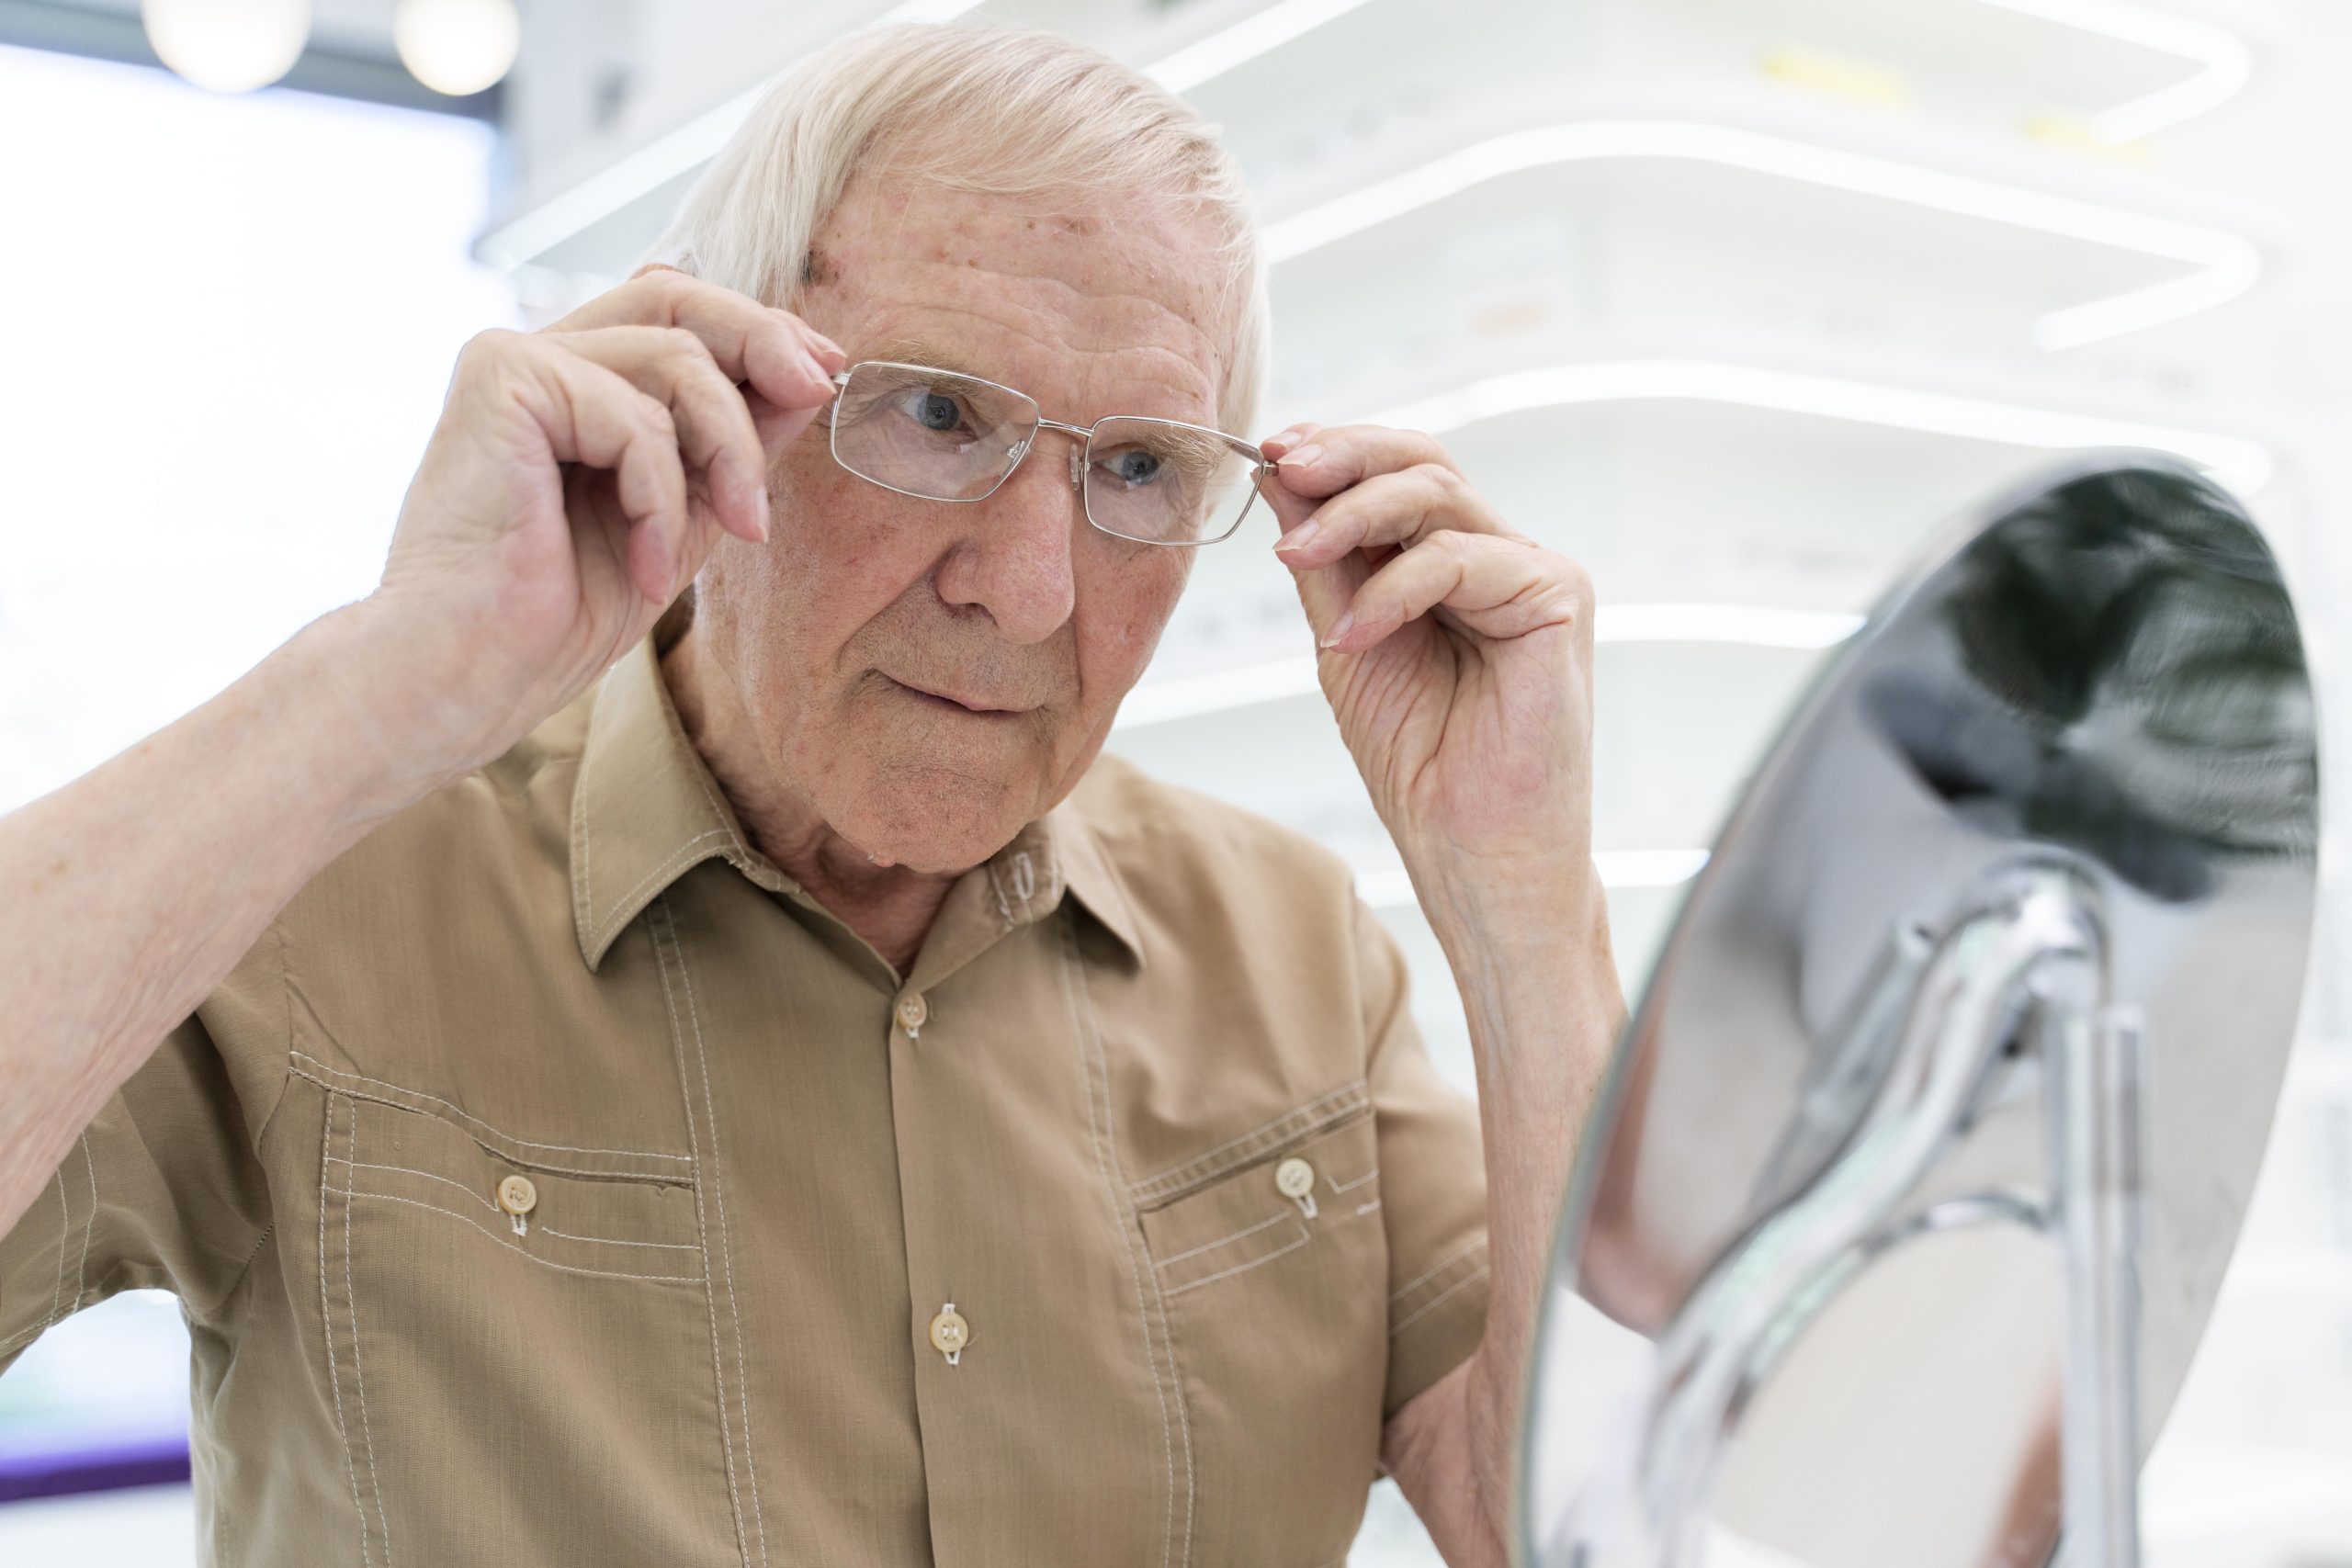 Presbyopia: Symptoms, Causes and Treatment